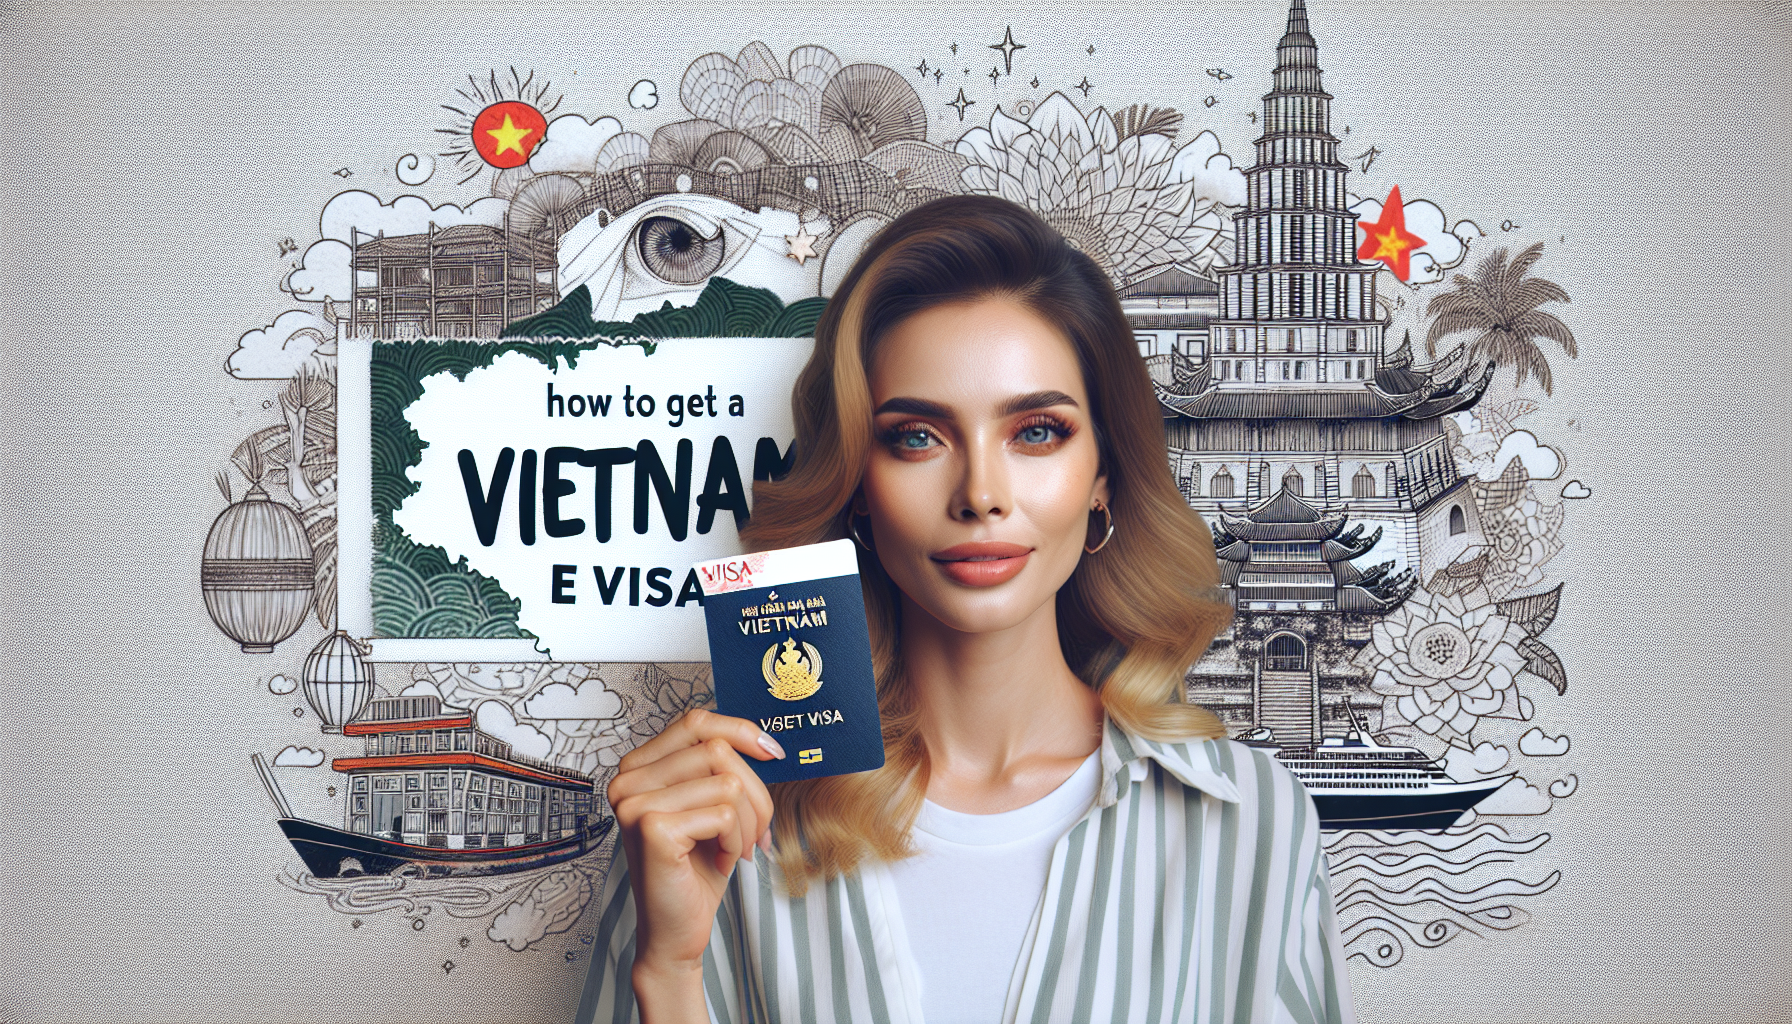 Vietnam Evisa for Citizens from Croatia